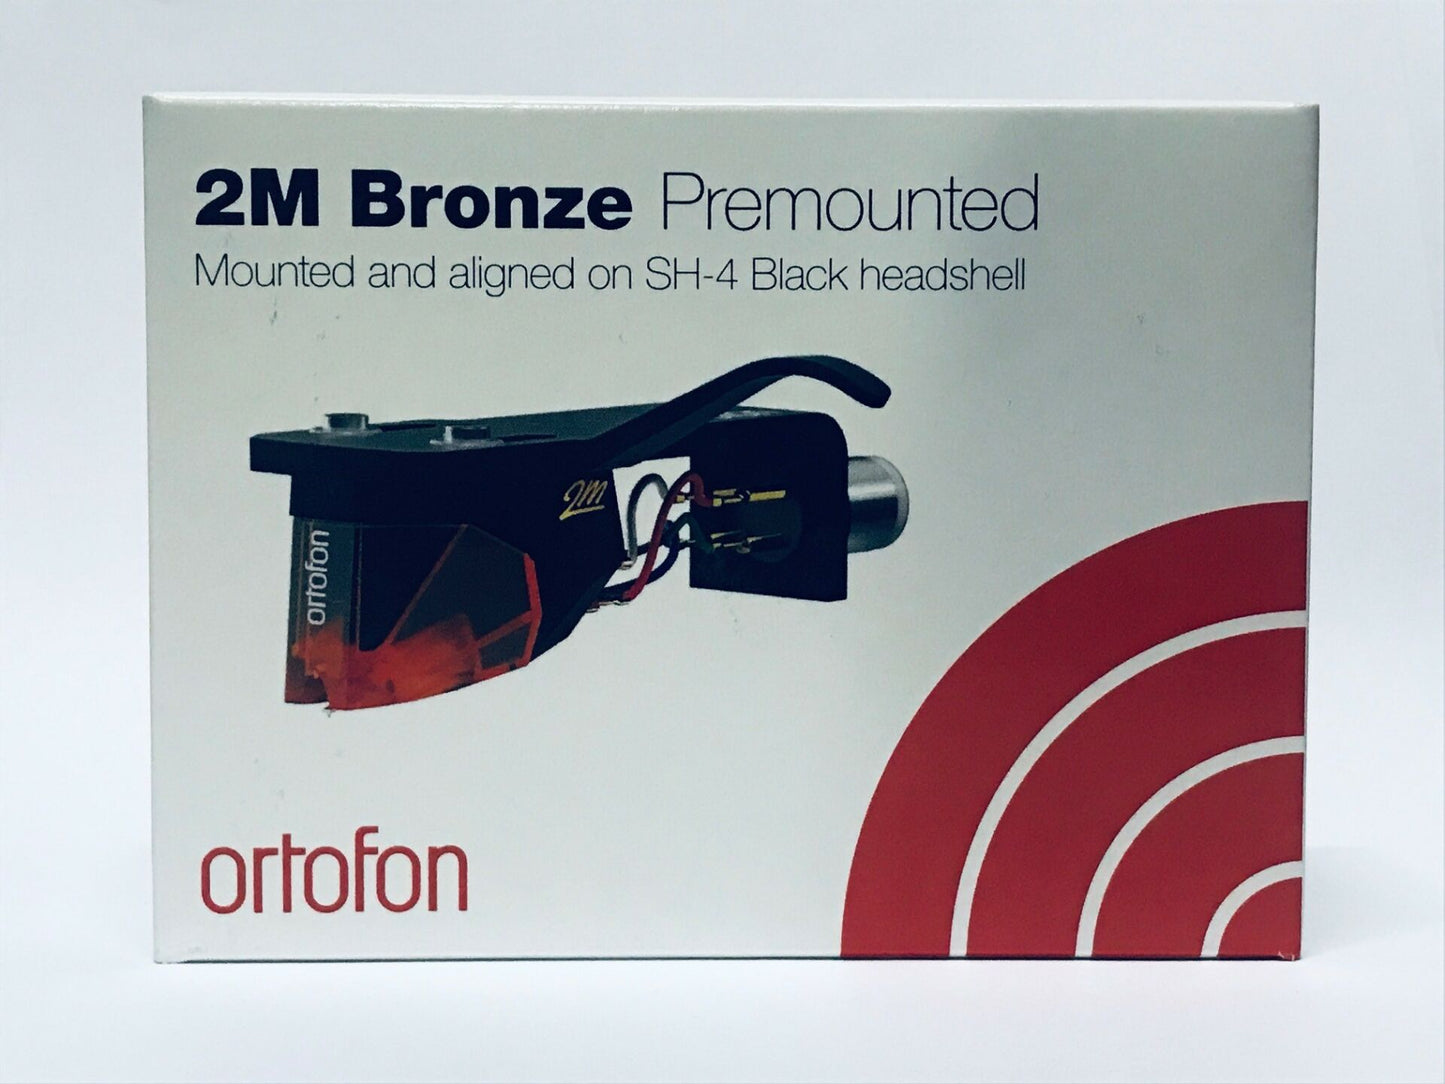 2M Bronze Premounted (2M Bronze + SH-4 Black)